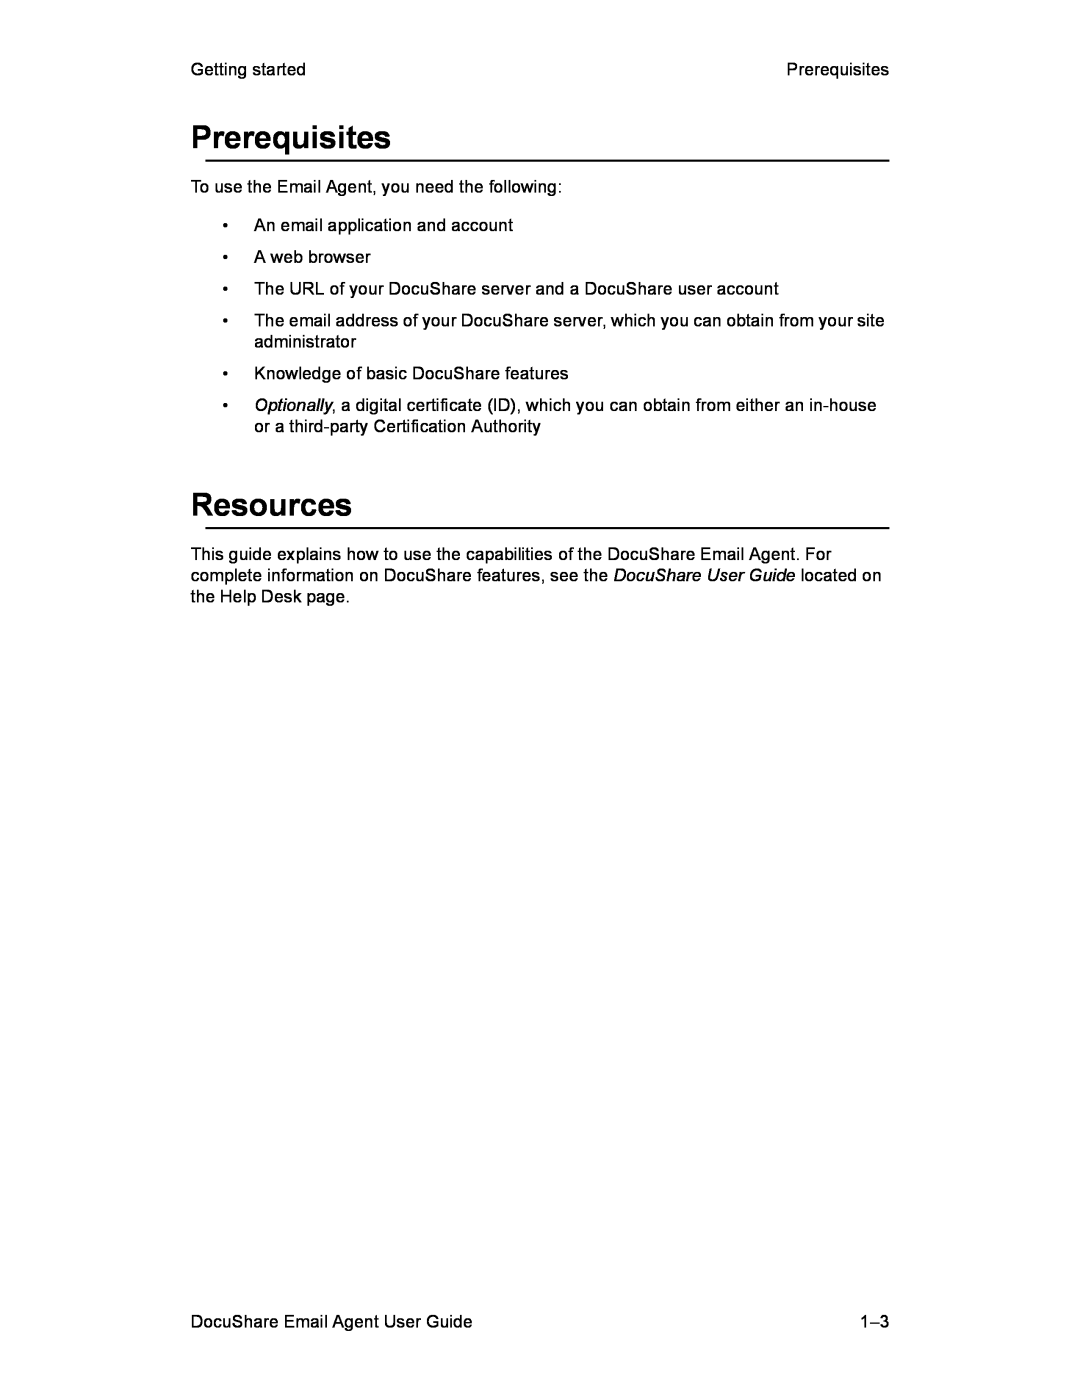 Xerox DocuShare 6.0 manual Prerequisites, Resources 